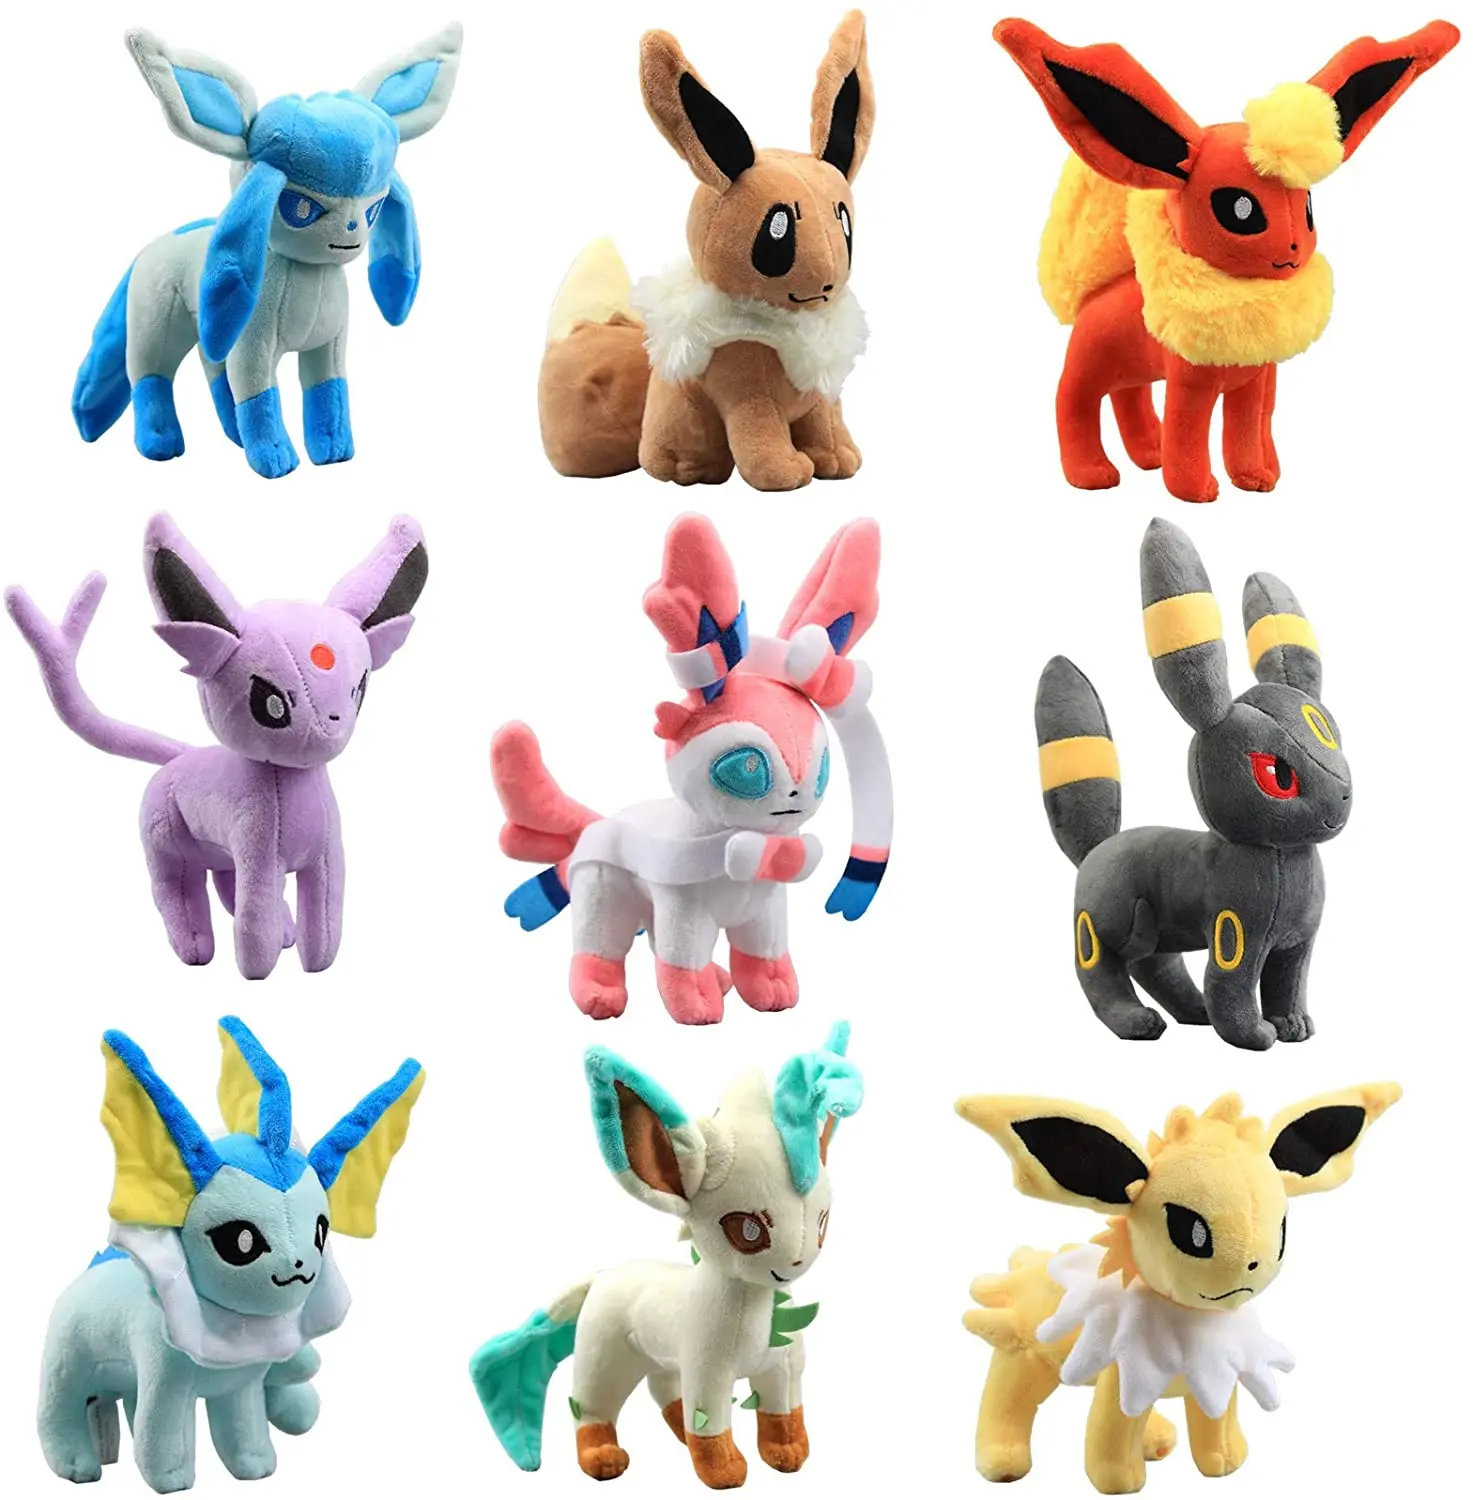 TAKARA TOMY-peluche de Pokémon para niños, juguete de peluche de Pikachu lindo, Eevee, Sylveon, Flareon, Jolteon, Umbreon, 2022